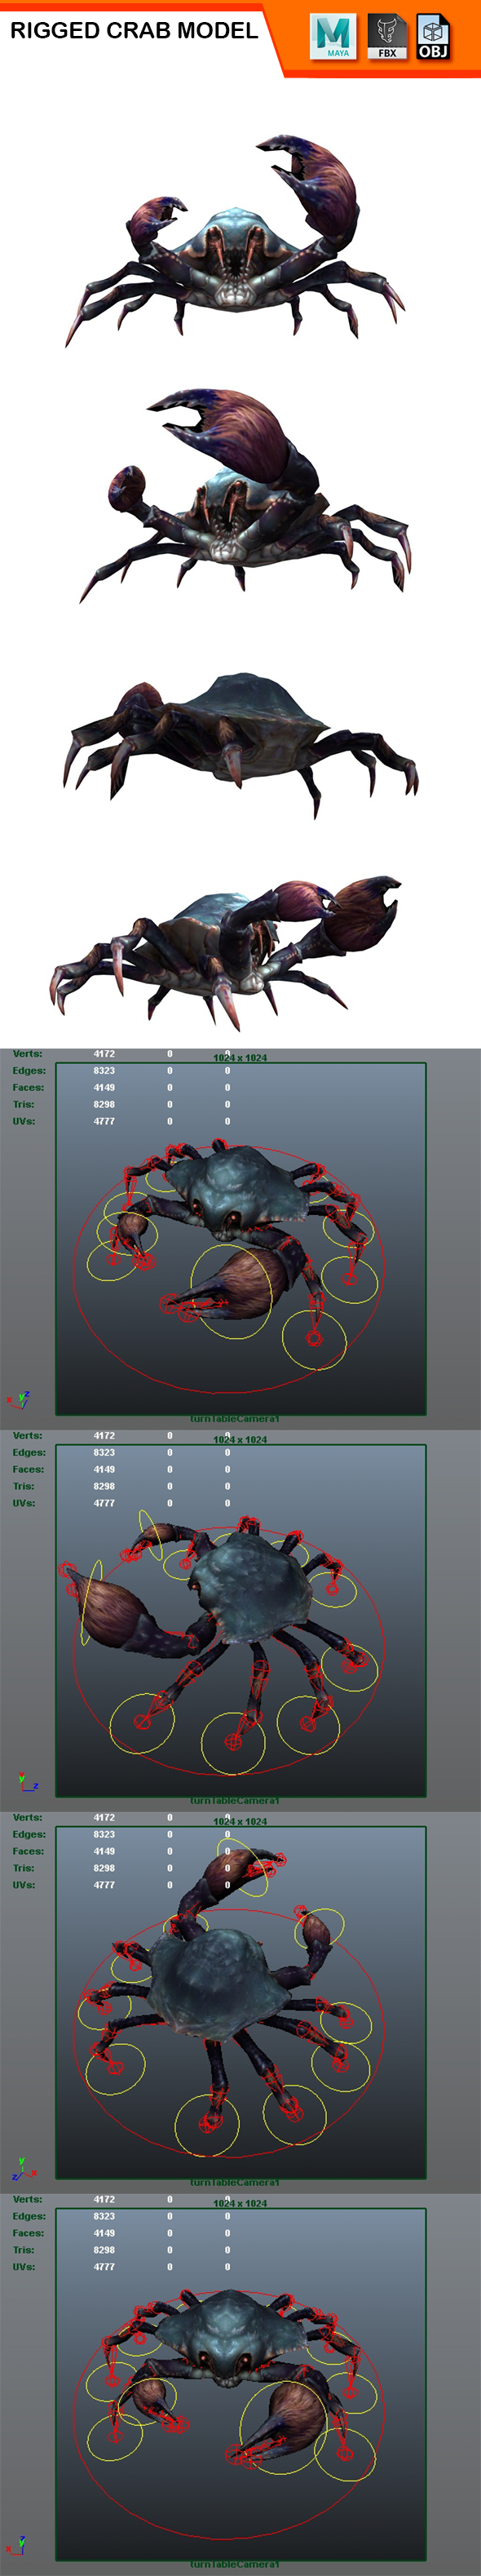 Rigged Crab Model - 3Docean 28405666